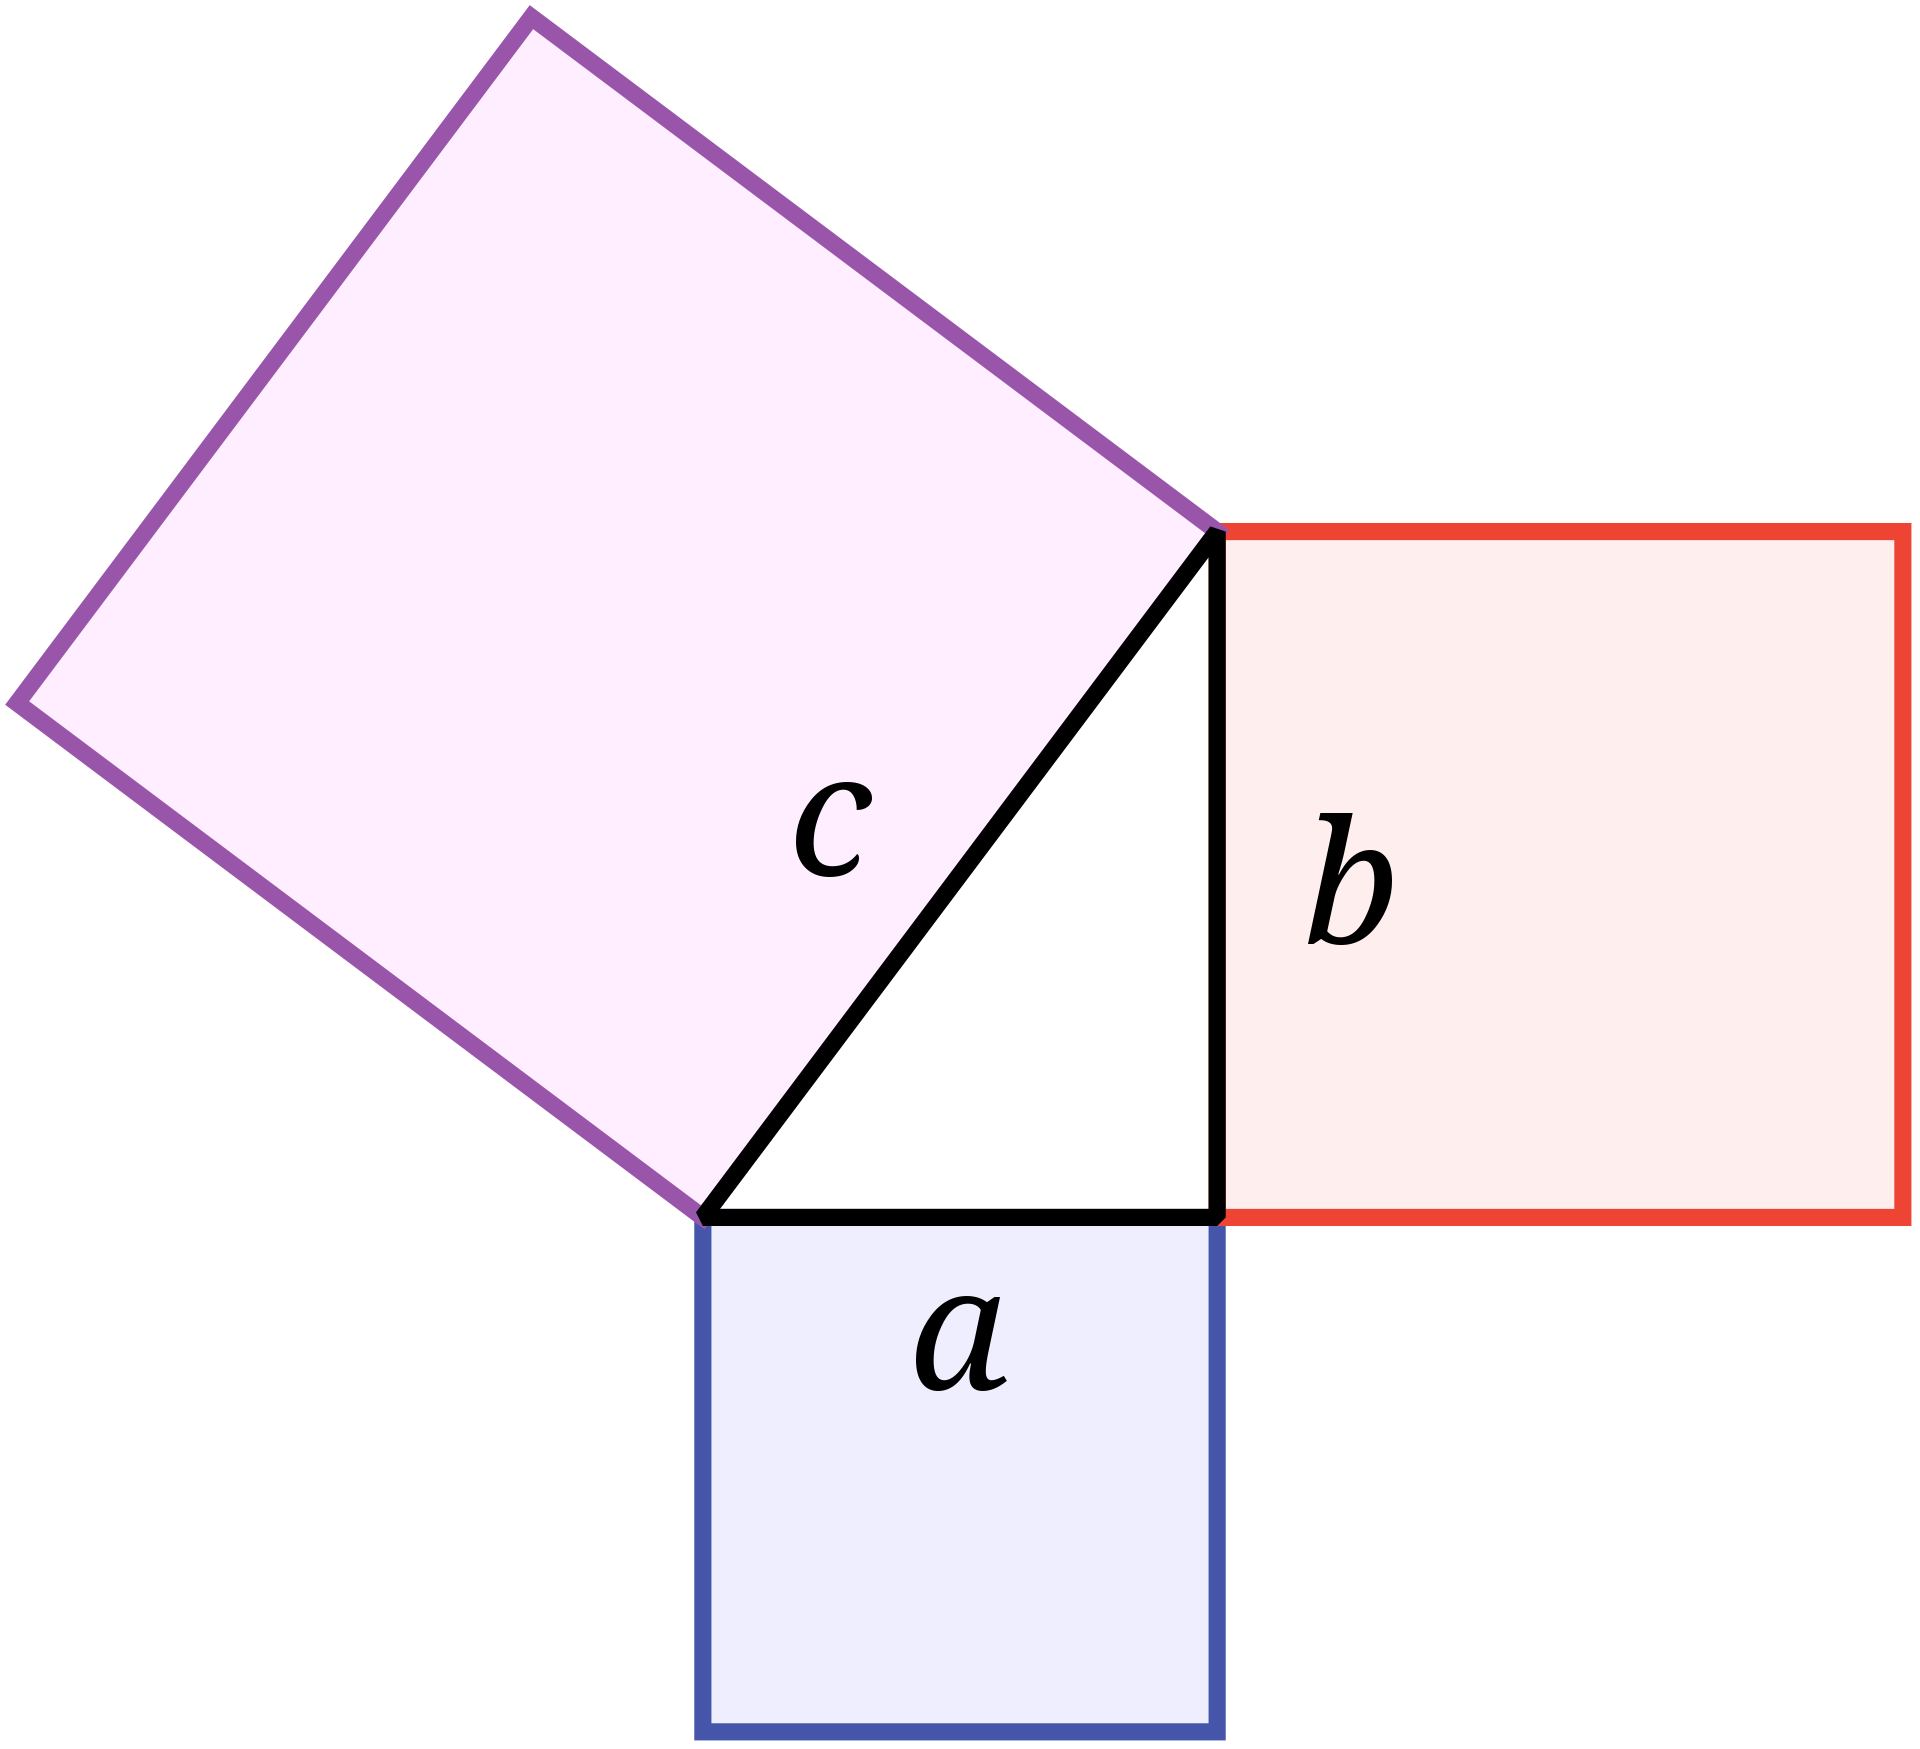 Pythagorean theorem https://en.wikipedia.org/wiki/Pythagorean_theorem